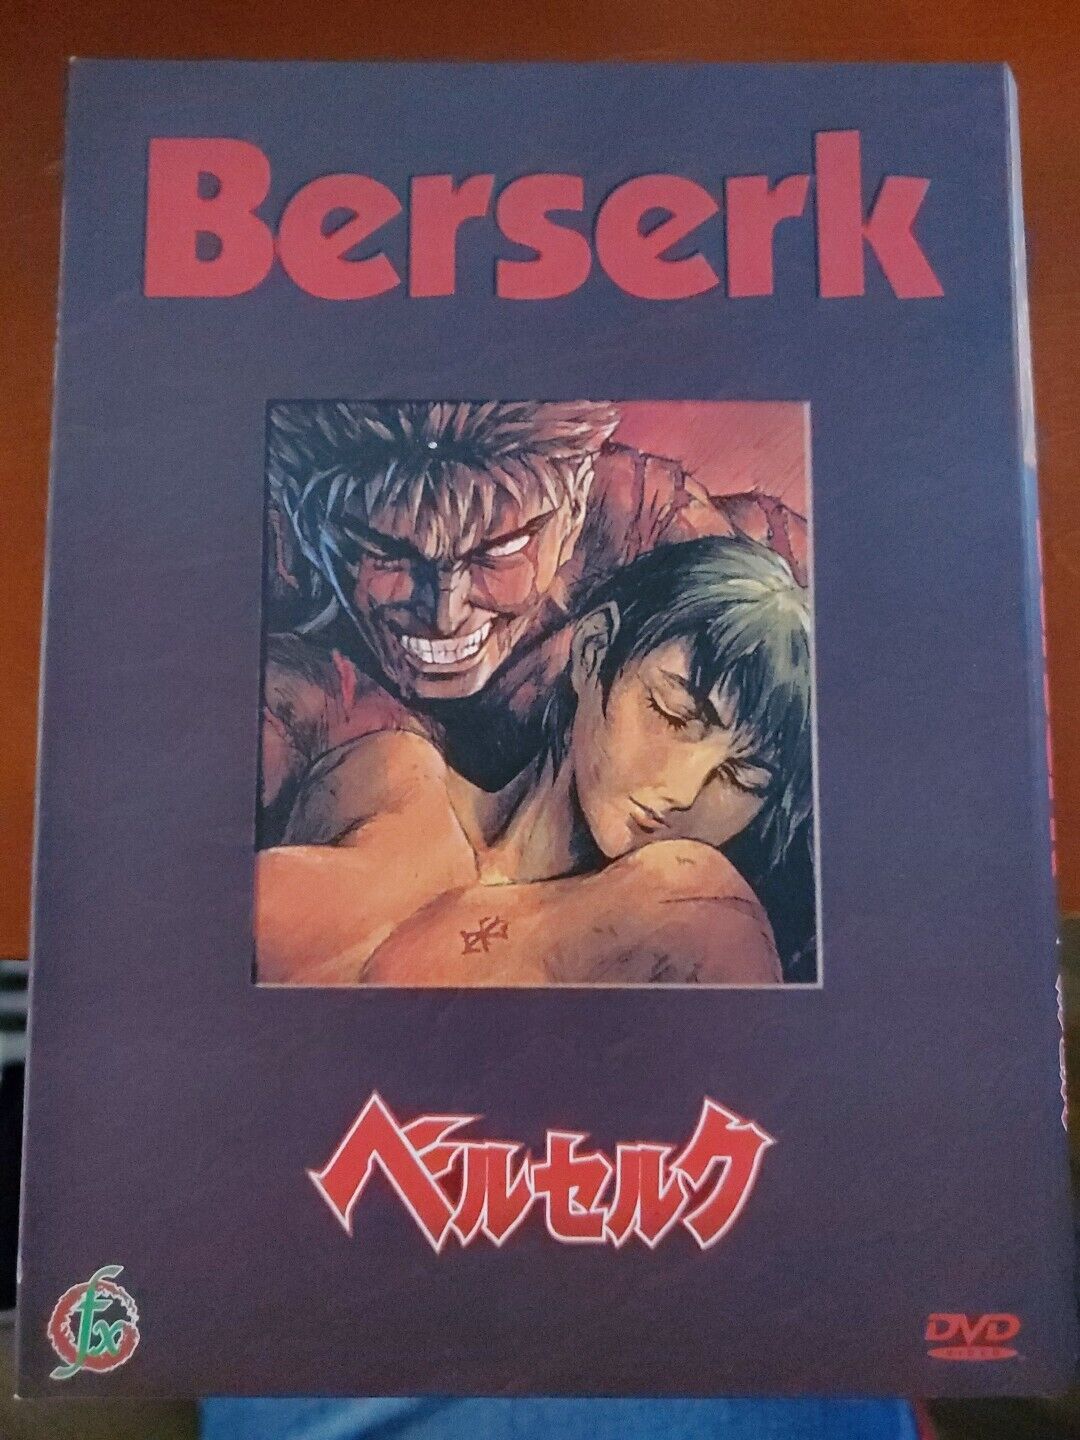 Berserk DVD-BOX limited edition Japanese Anime used VERY GOOD. 